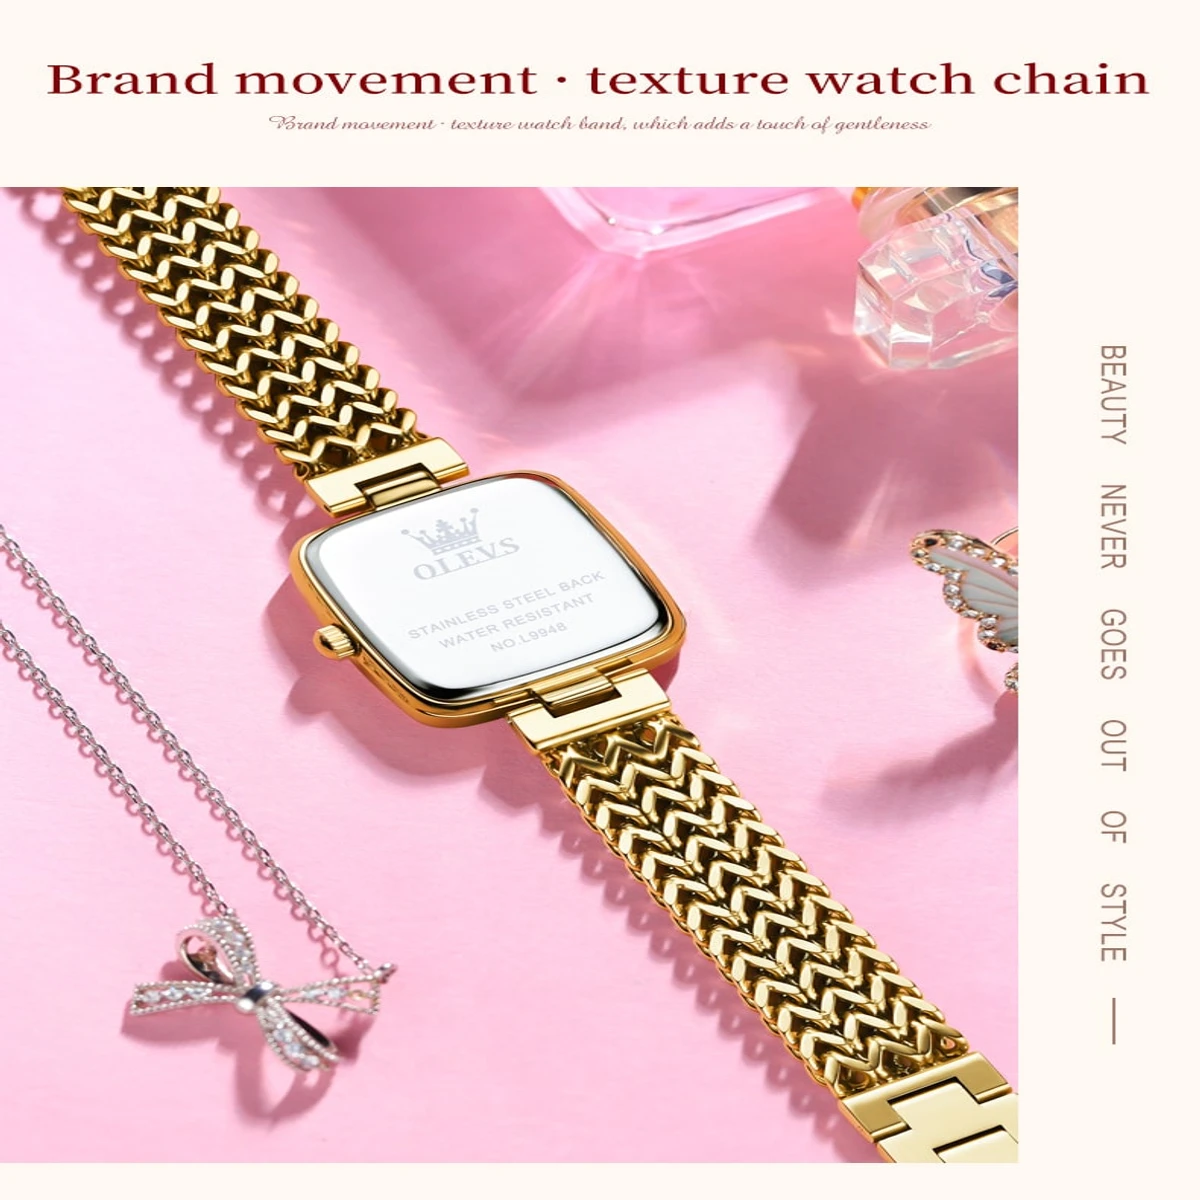 OLEVS WOMEN WATCH MODEL 9948 Square Fashion Ultra-Thin Quartz Watch - COOLER GOLDEN CHAI DIAL BLUE  STON  3TA